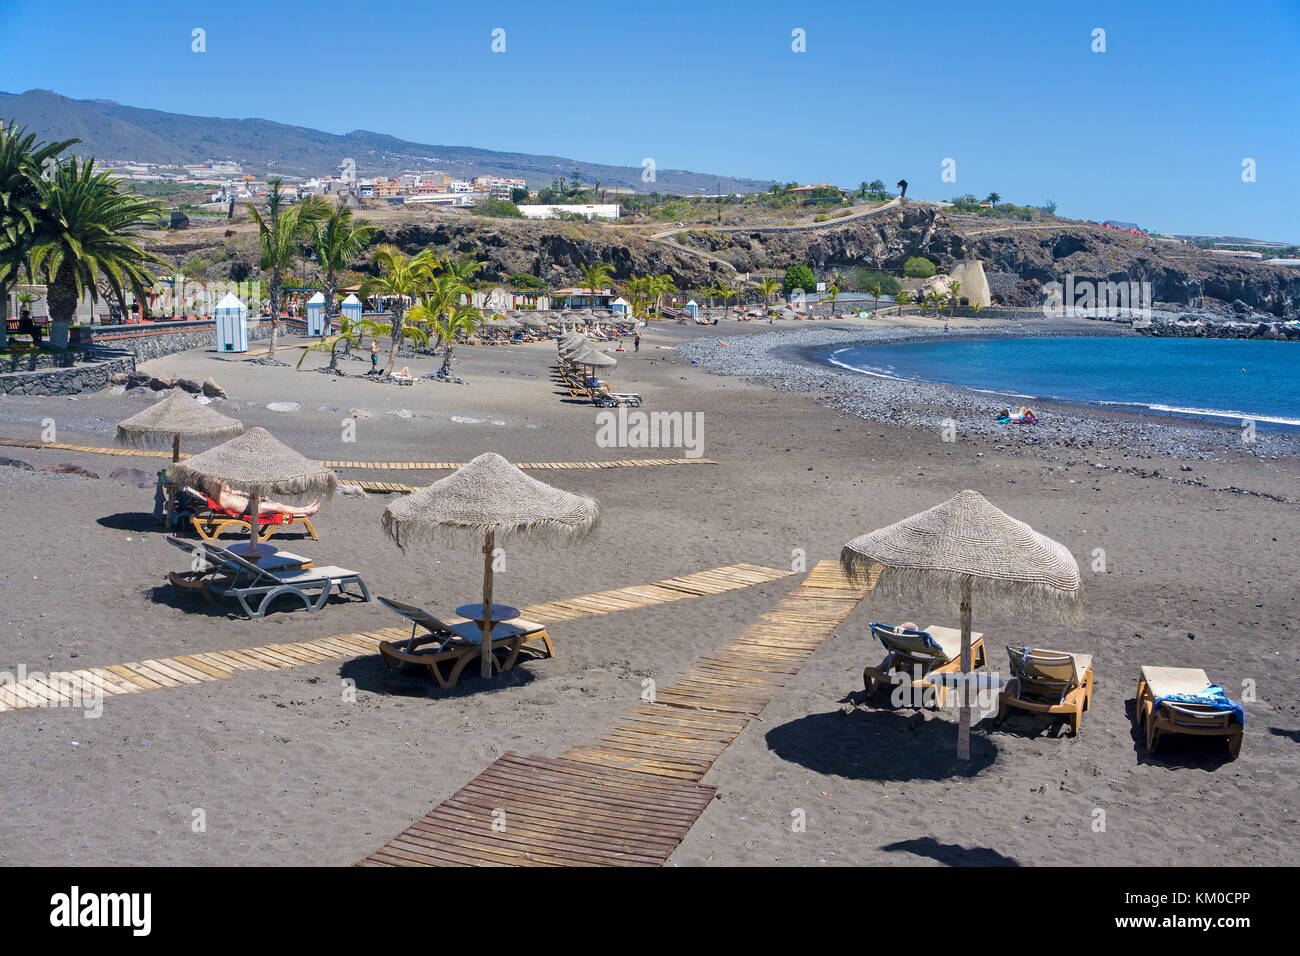 Playa San Juan, beach at west coast of the island, Tenerife island, Canary islands, Spain Stock Photo